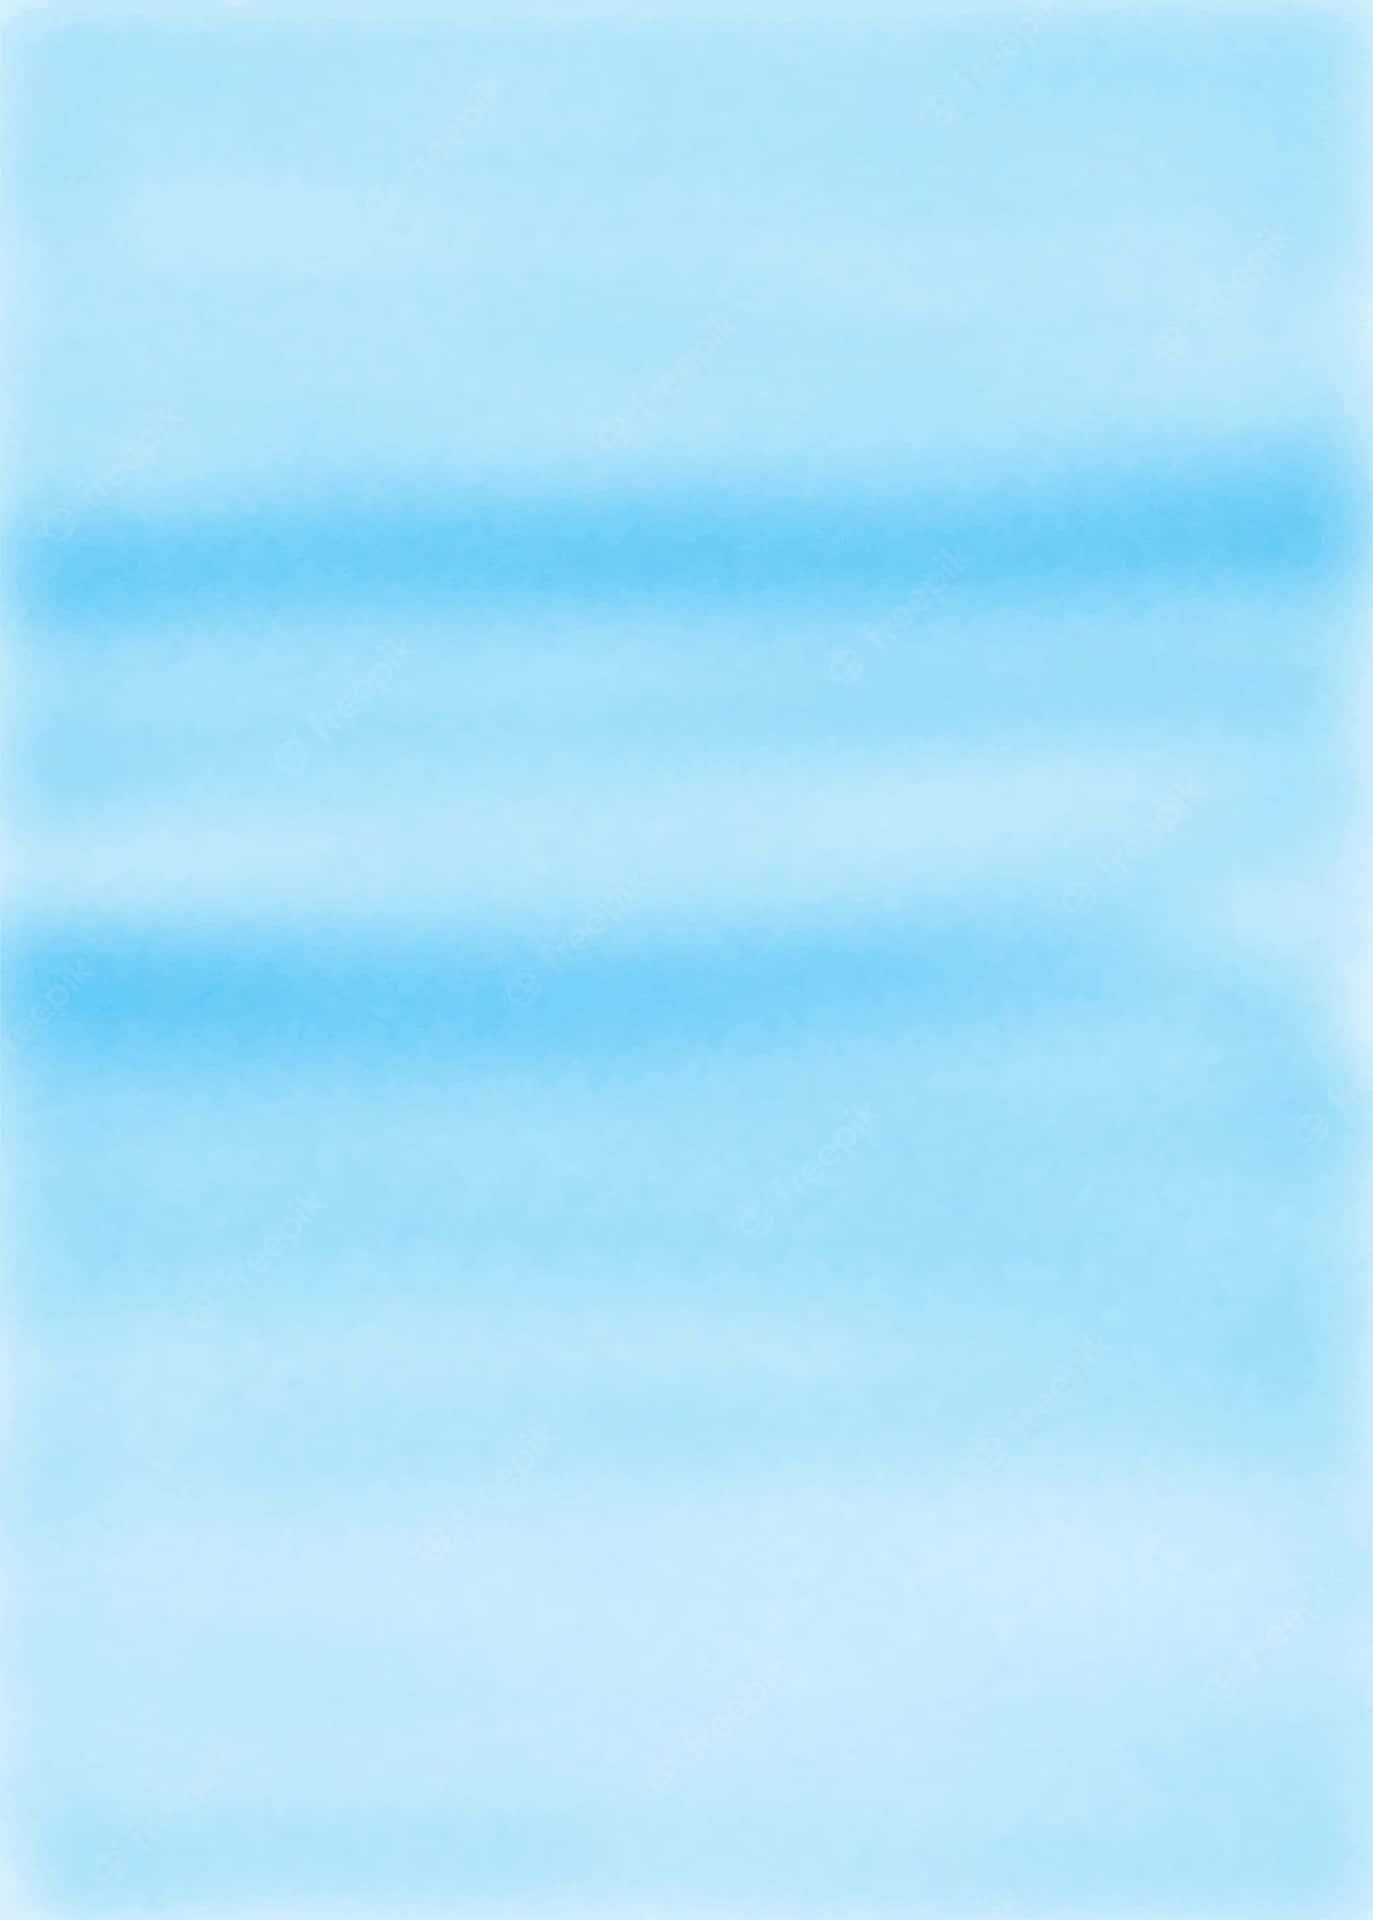 Blue Ombre Background Light Blue Cloudy Texture